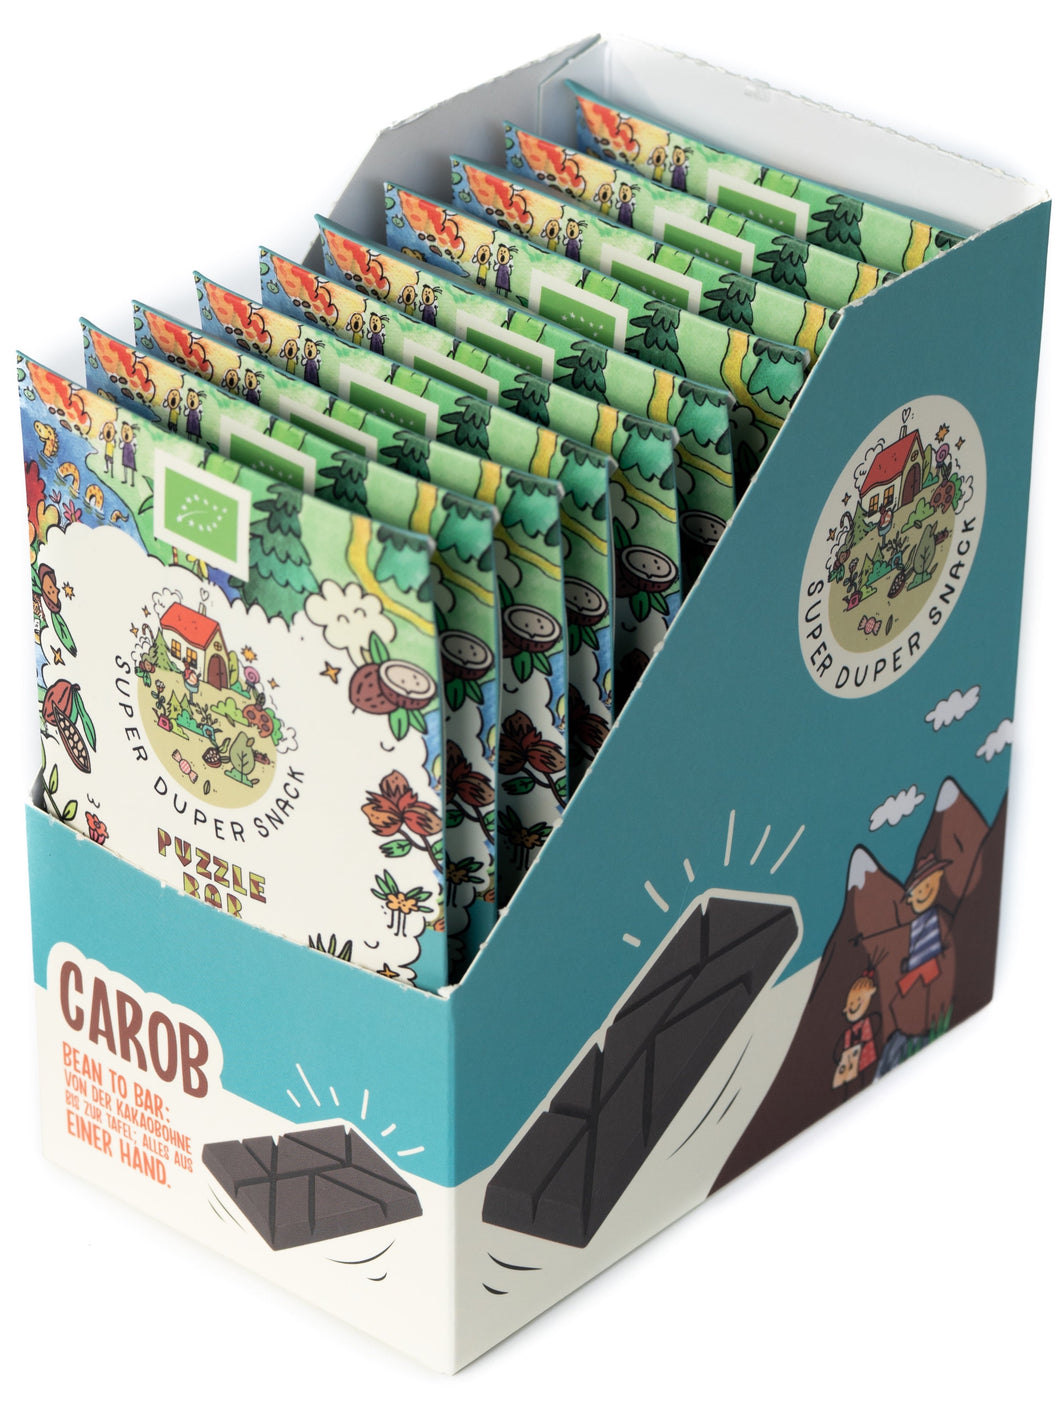 Box: 10 Puzzle Bar - Carob